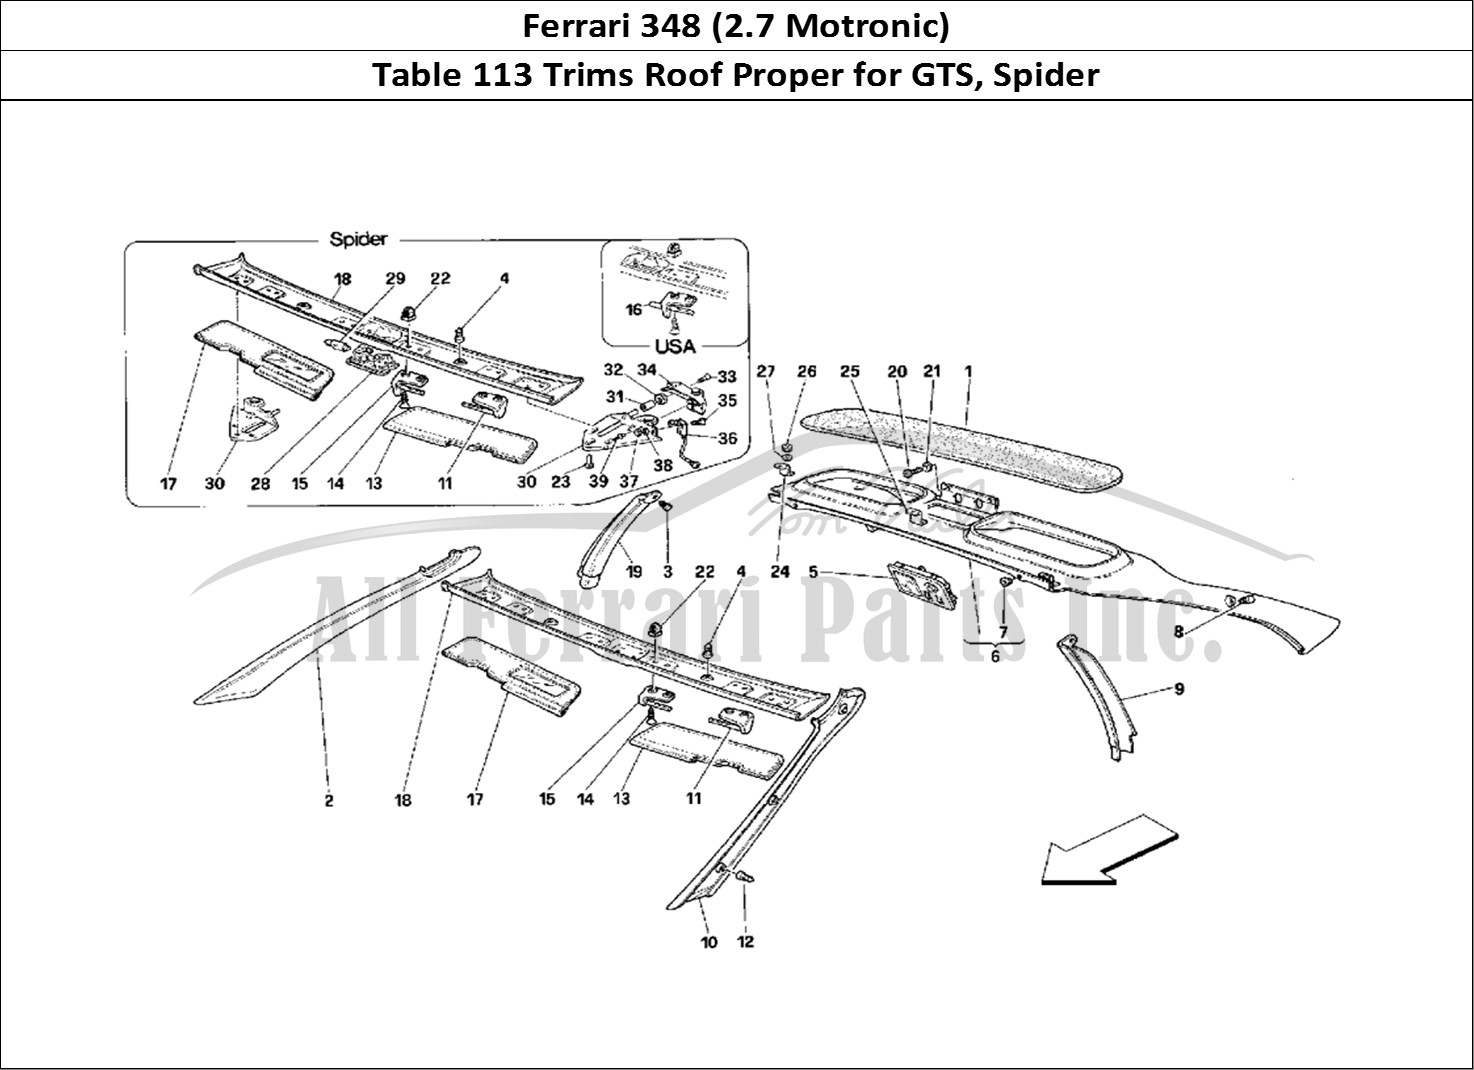 Ferrari Parts Ferrari 348 (2.7 Motronic) Page 113 Roof Trims -Valid for GTS